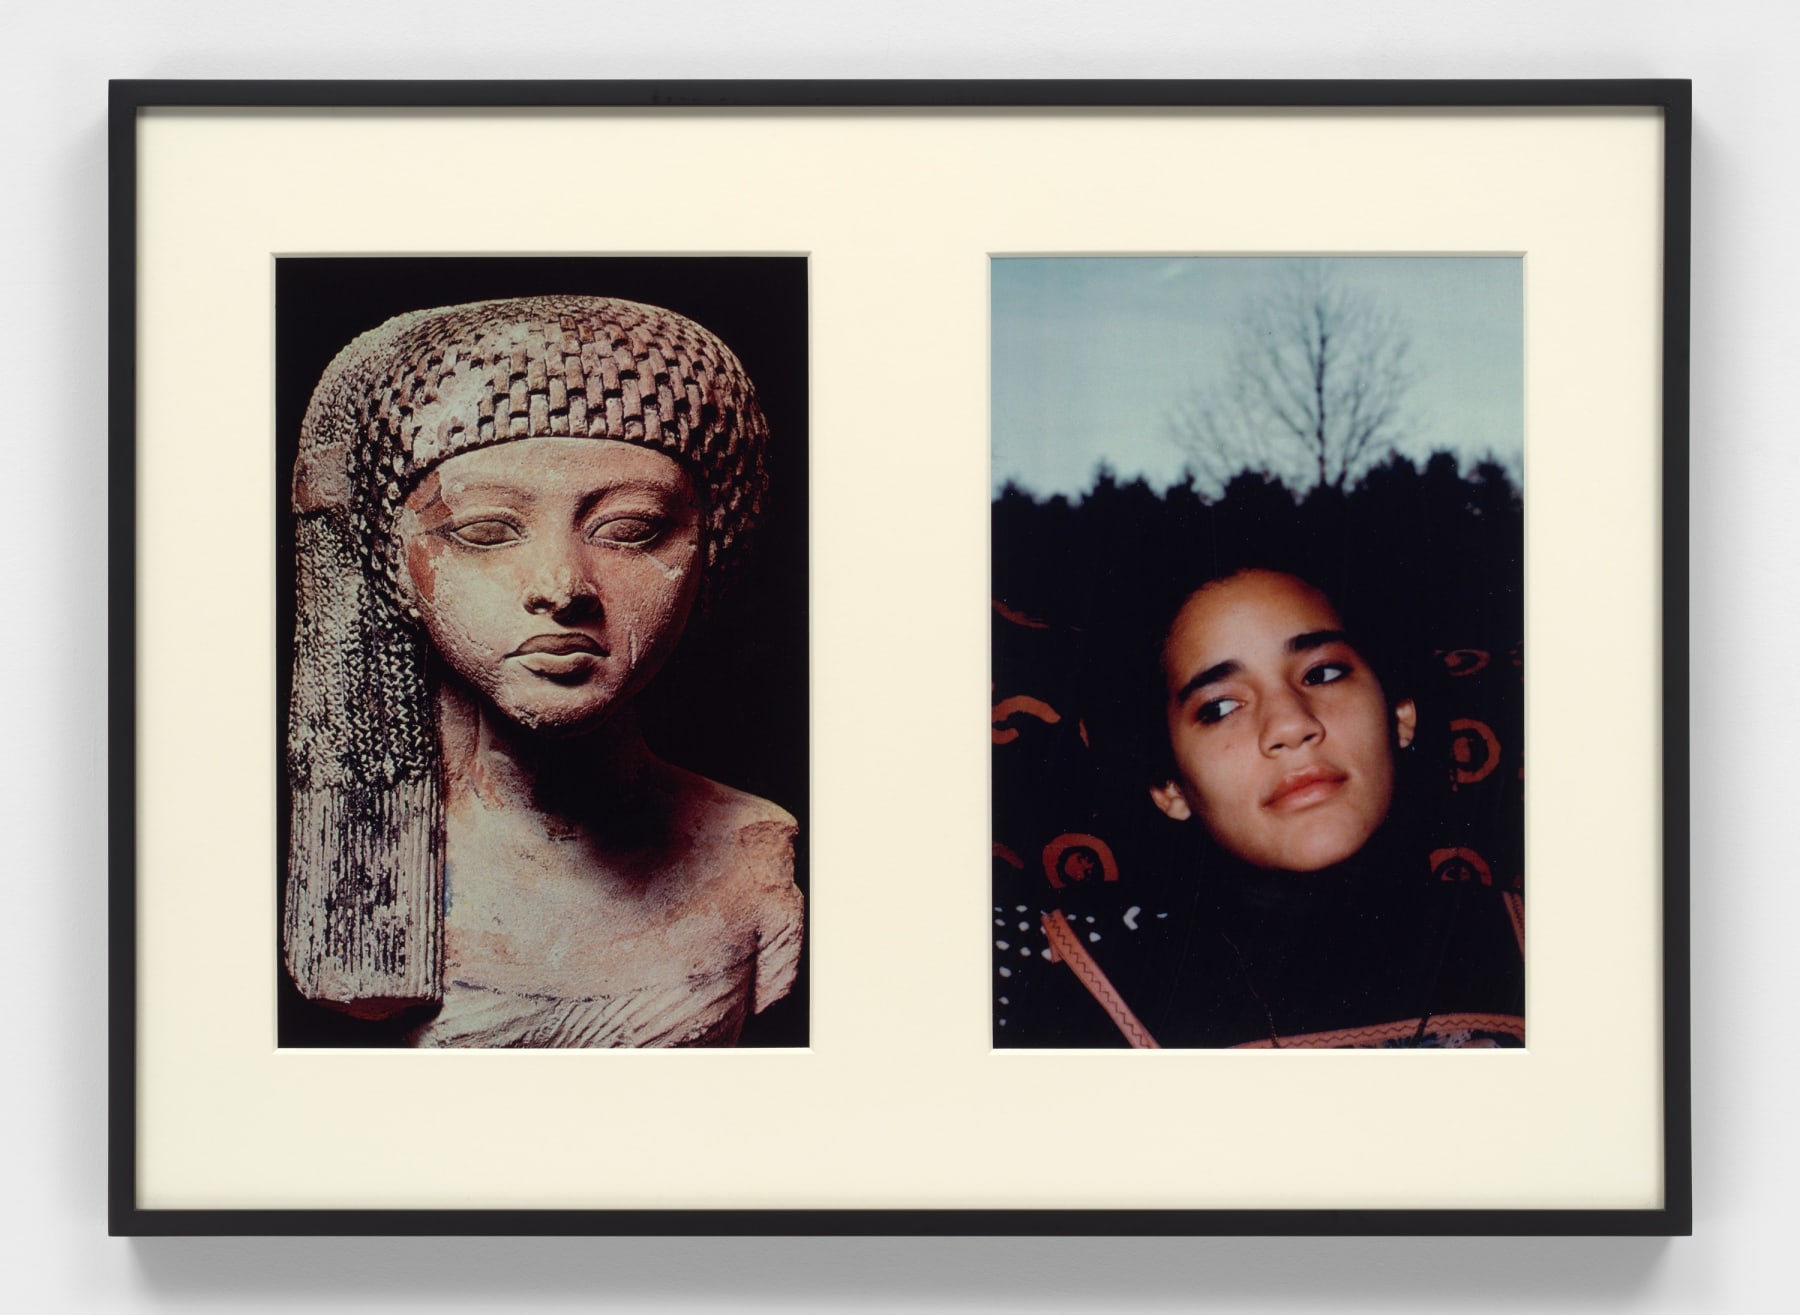 Lorraine O'Grady, Miscegenated Family Album (Worldly Princesses), L: Nefertiti's daughter, Merytaten; R: Devonia's daughter, Kimberley, 1980/1994